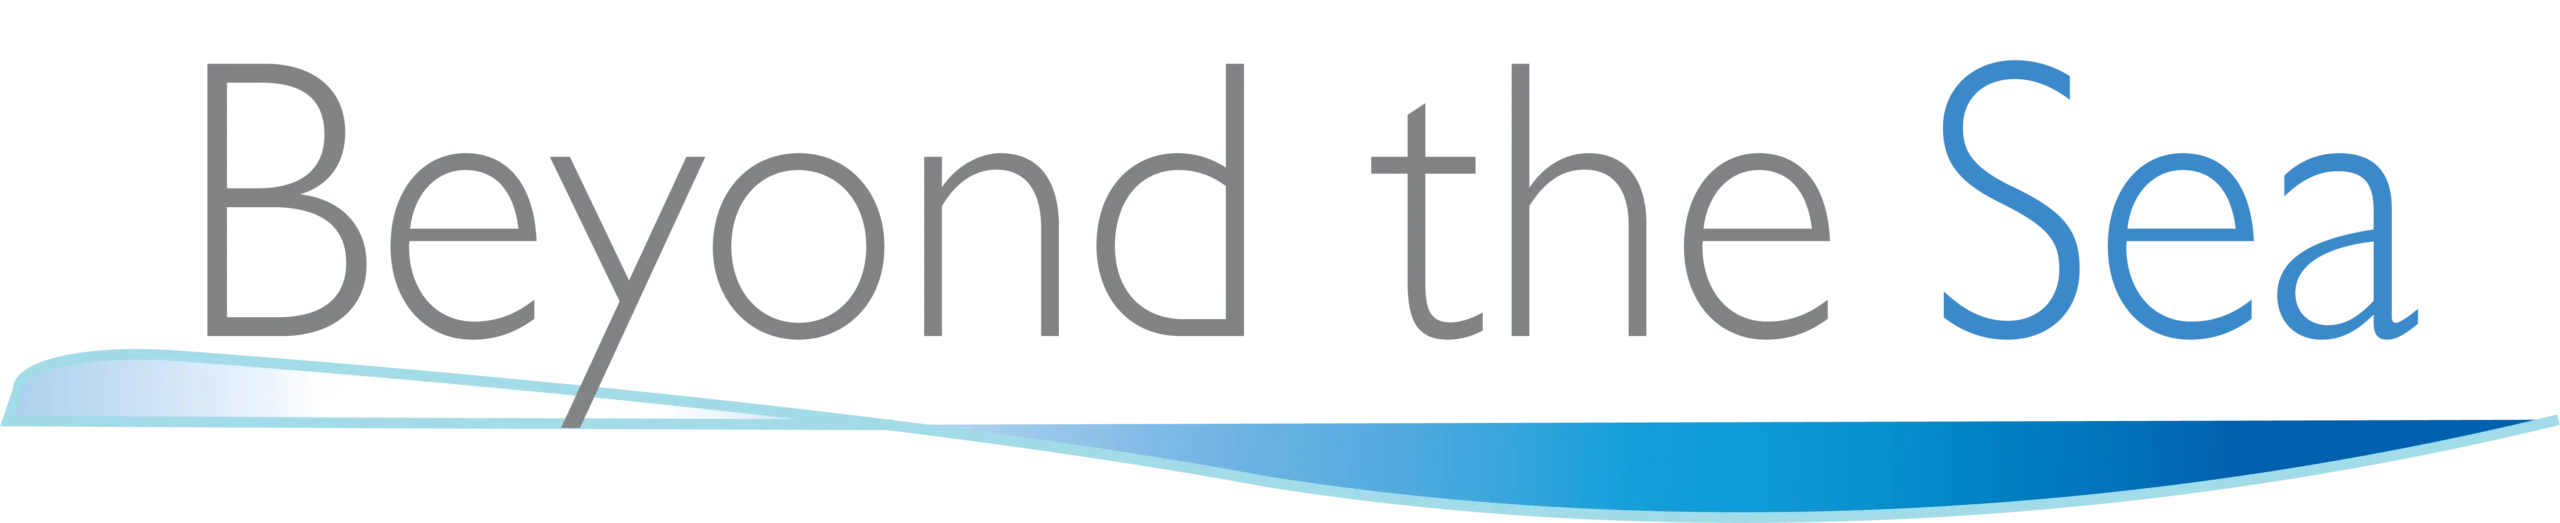 Beyond the Sea Logo